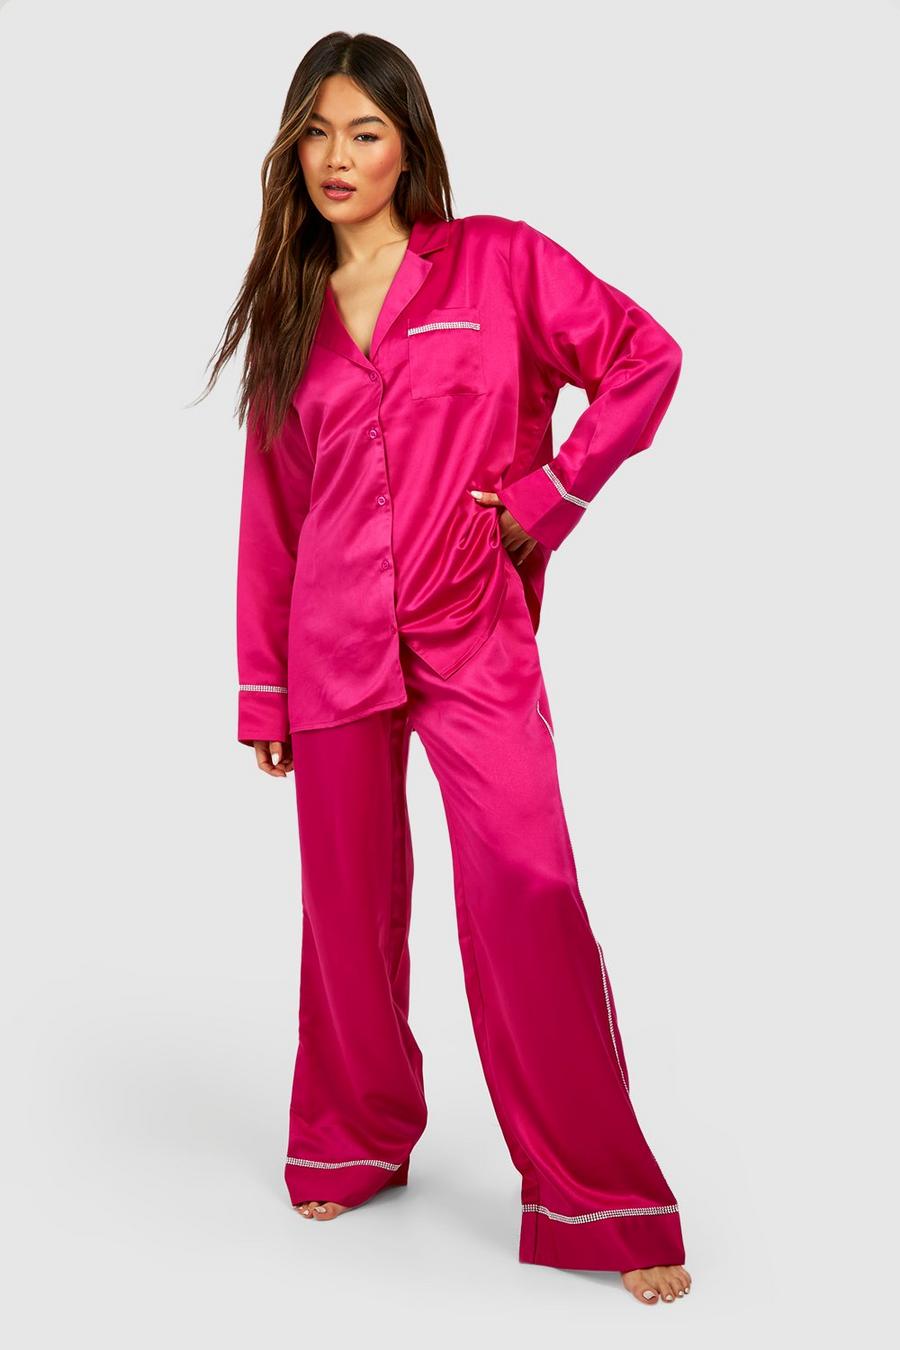 Ensemble premium avec chemise et pantalon, Hot pink image number 1